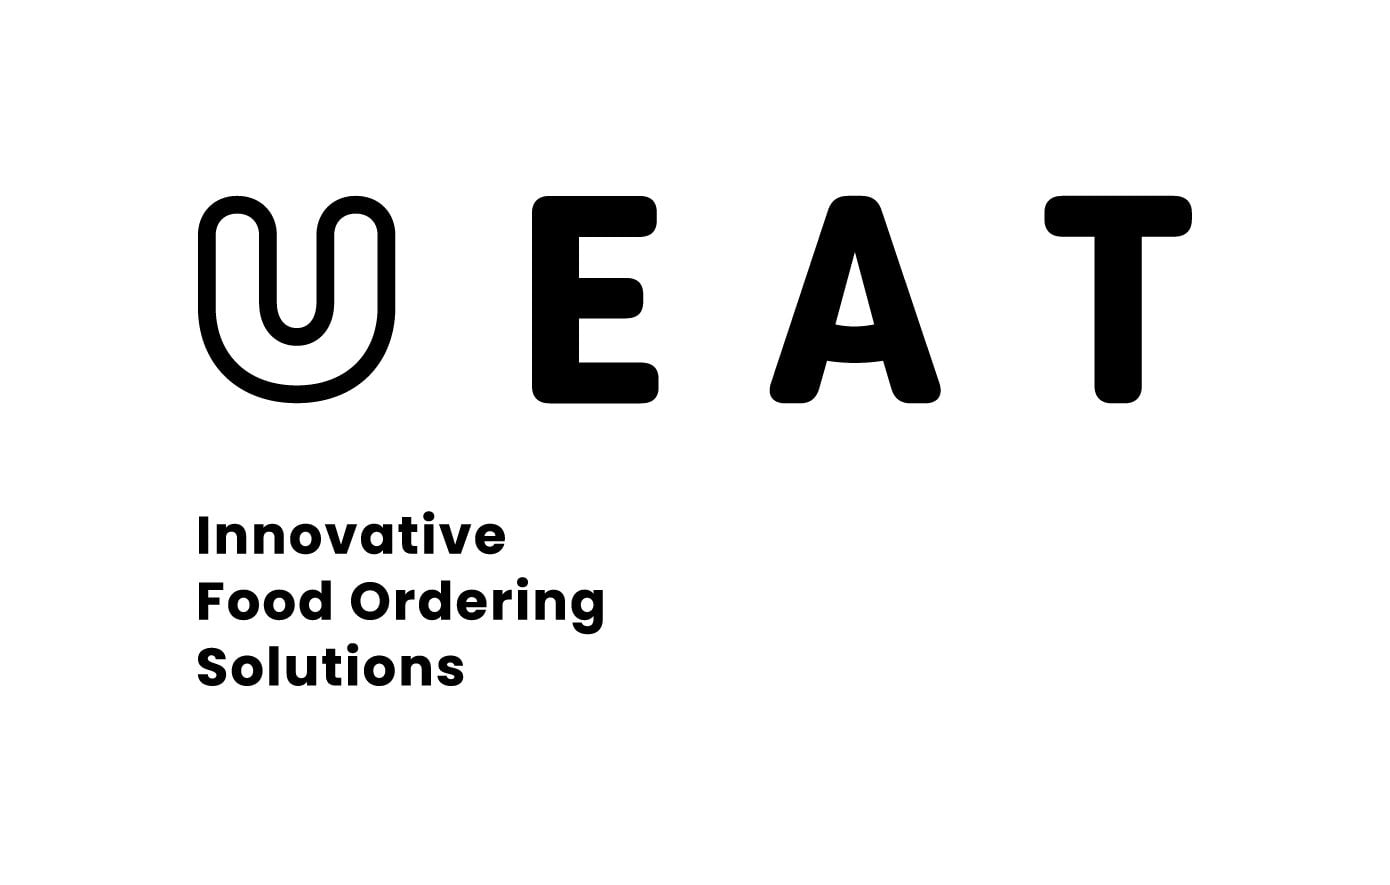 ueat_logo_inboundmarketing